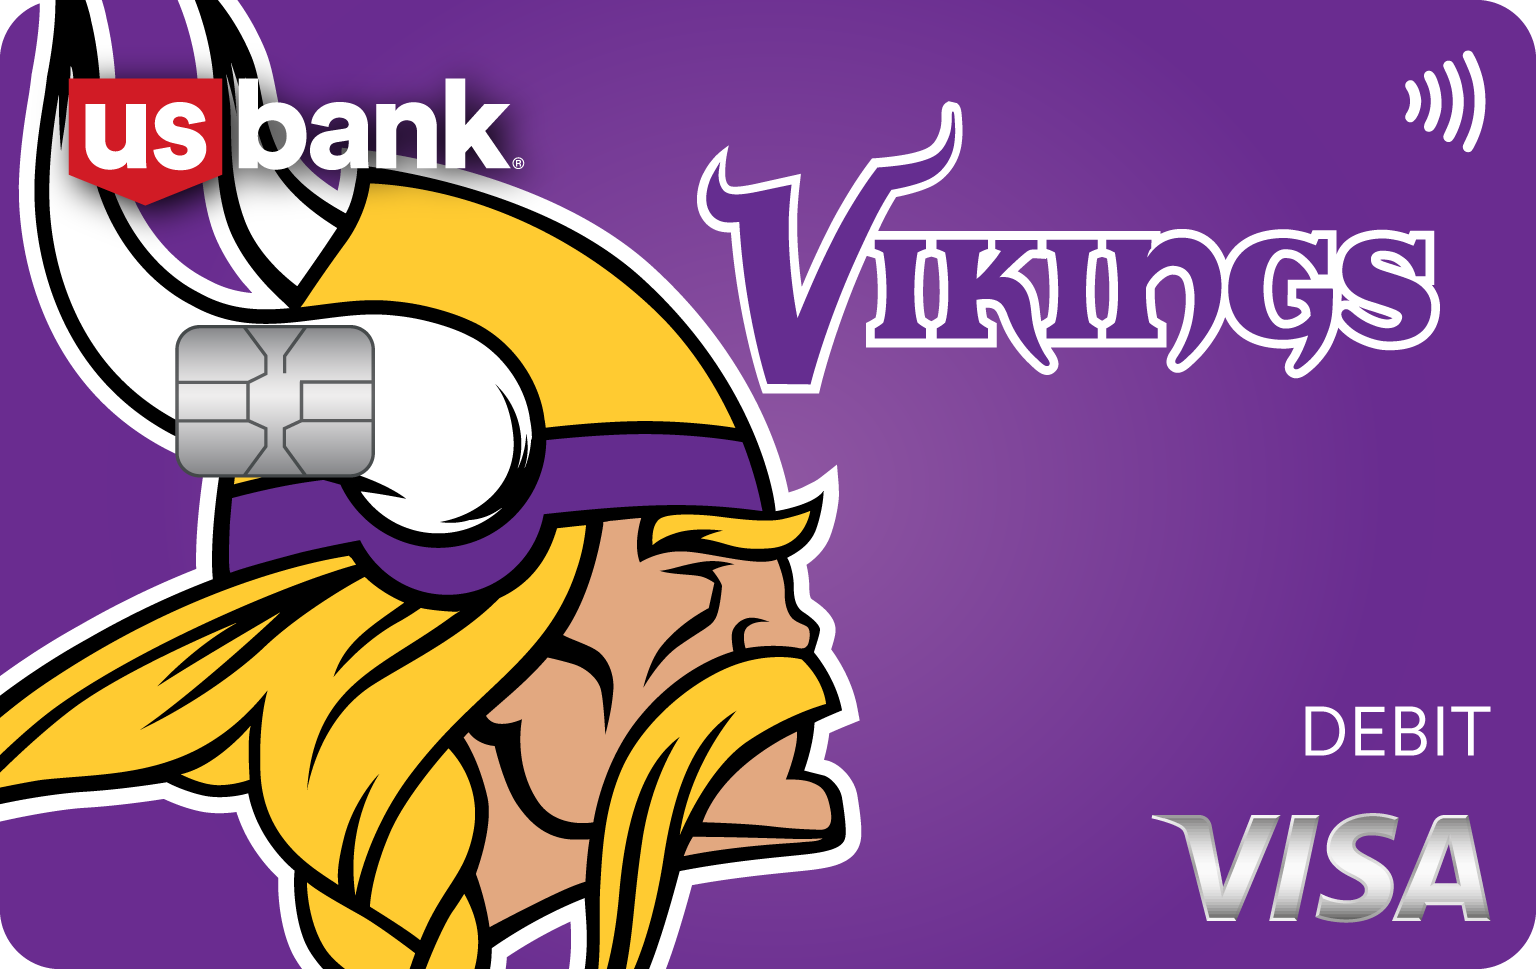 Tarjeta 6. Diseño de tarjeta de débito Visa de los Vikings de Minnesota.